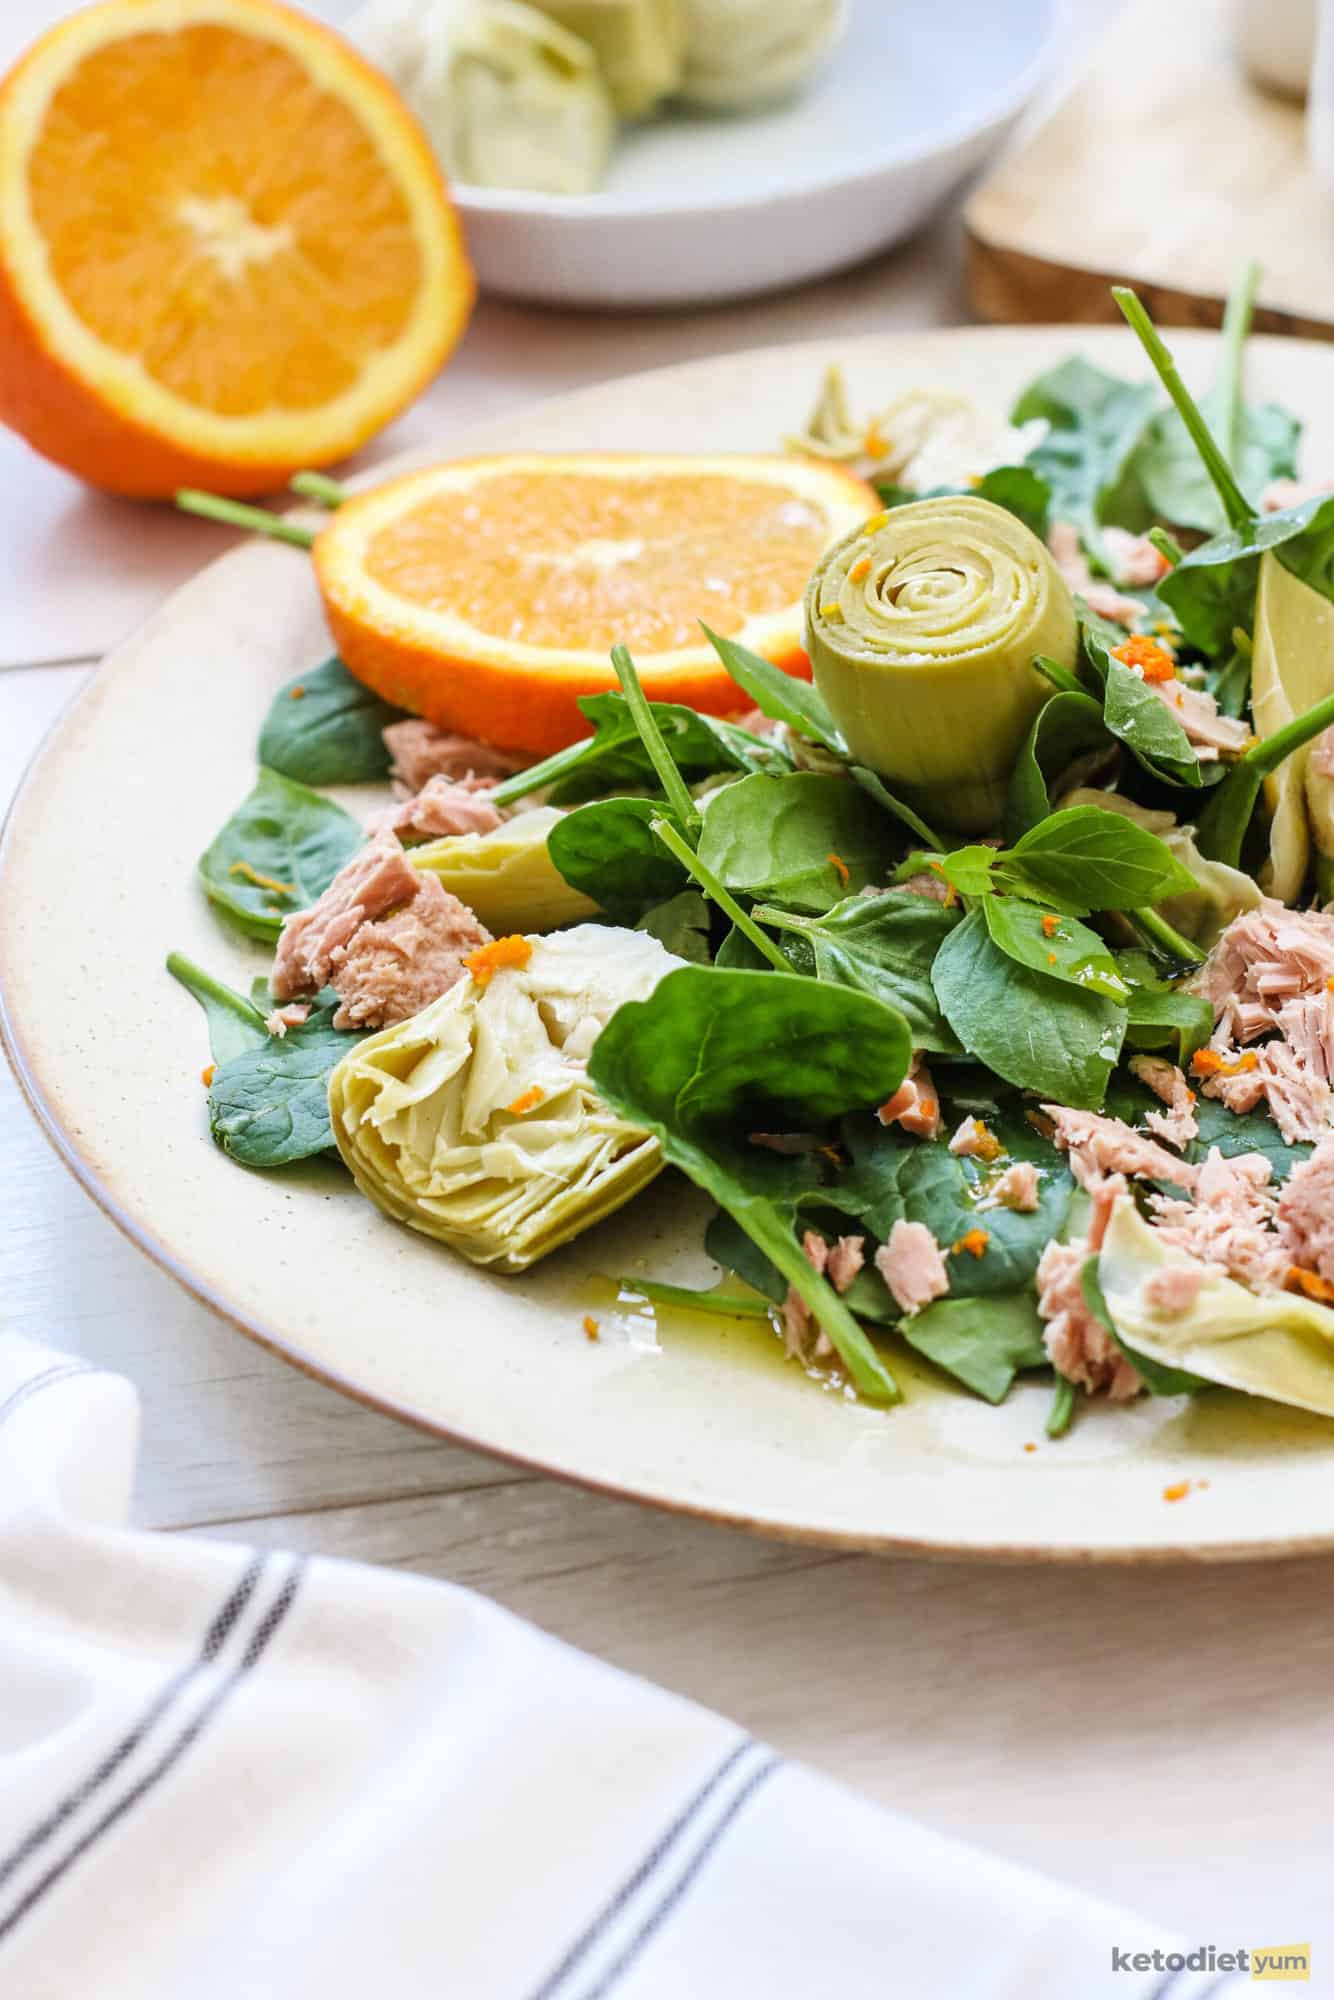 Tuna Spinach And Artichoke Salad With Orange Dressing